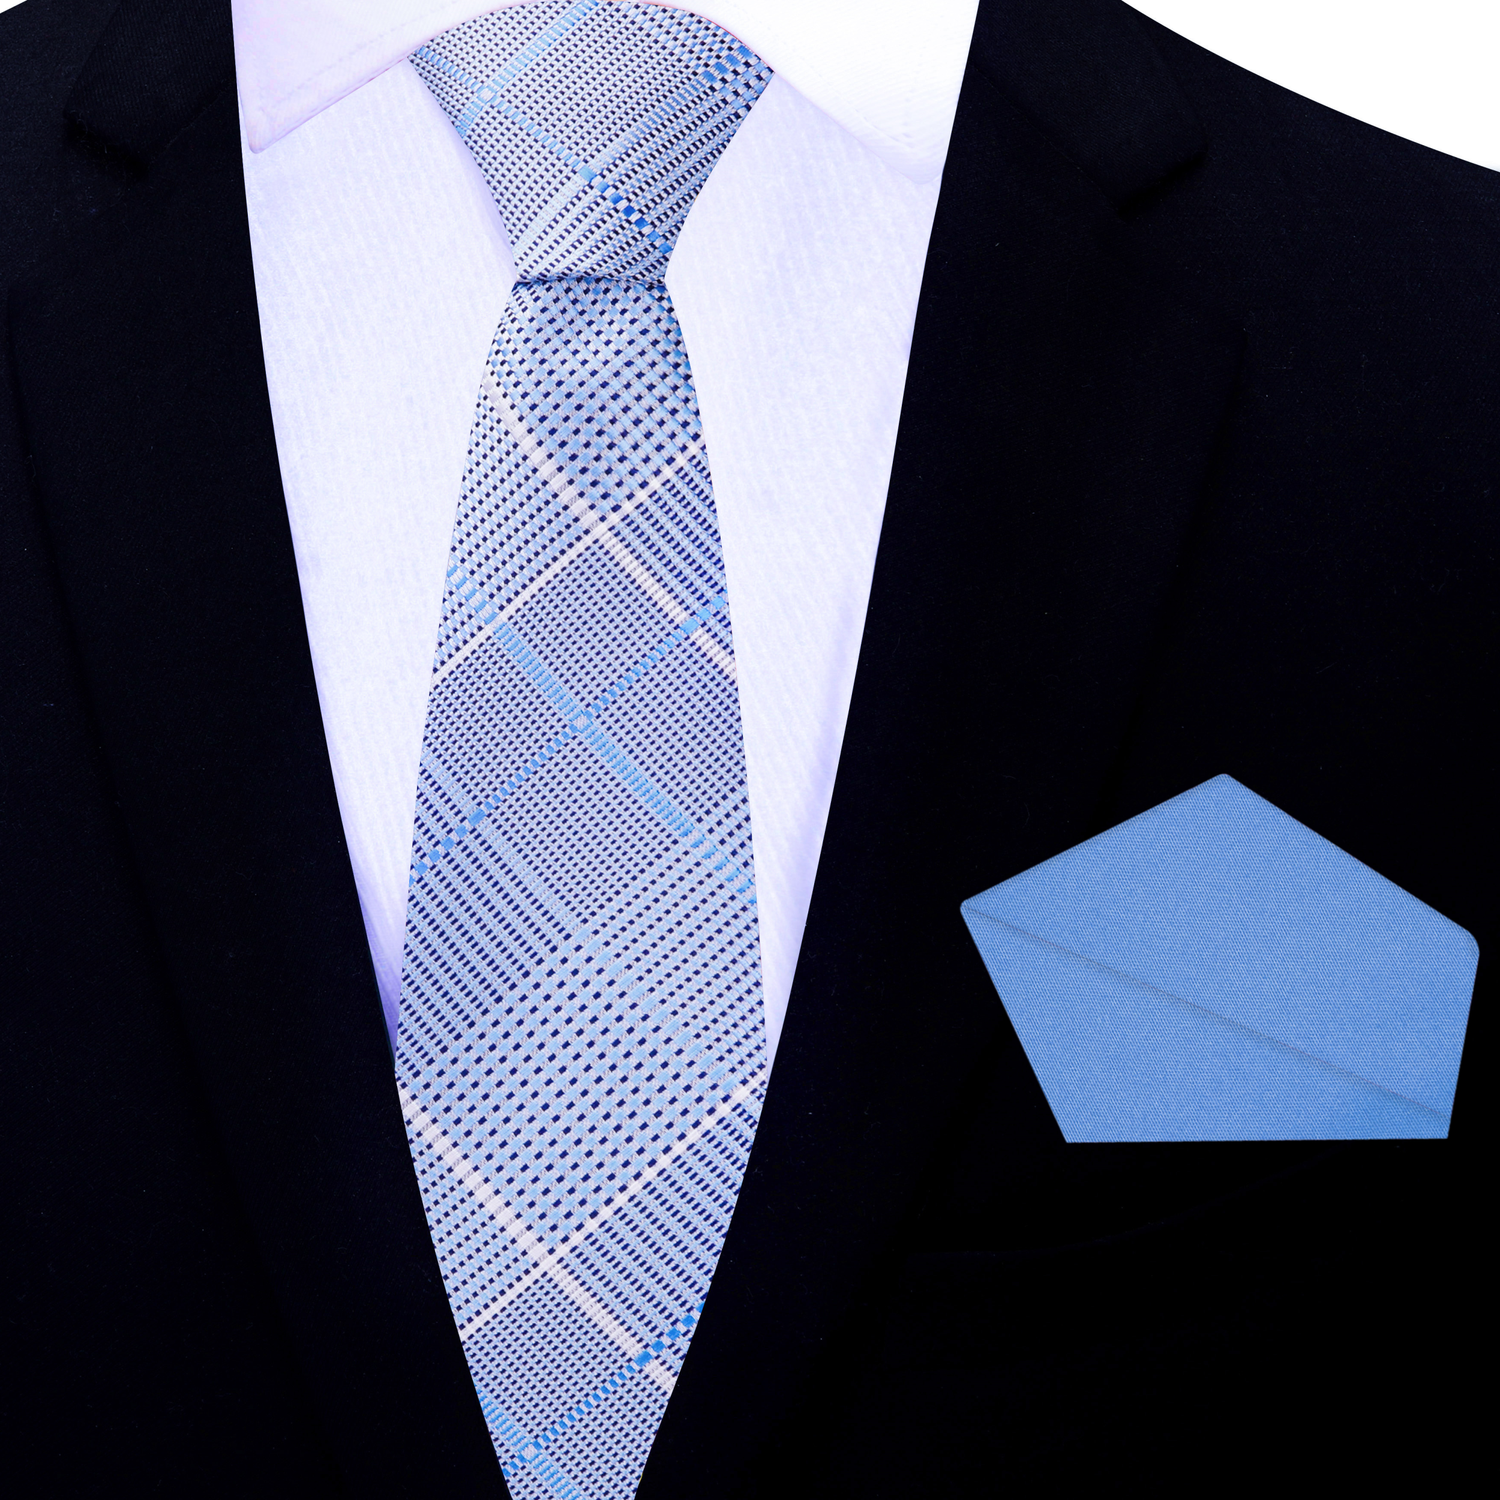 Thin Tie: Light Blue, White Plaid Tie and Light Blue Square